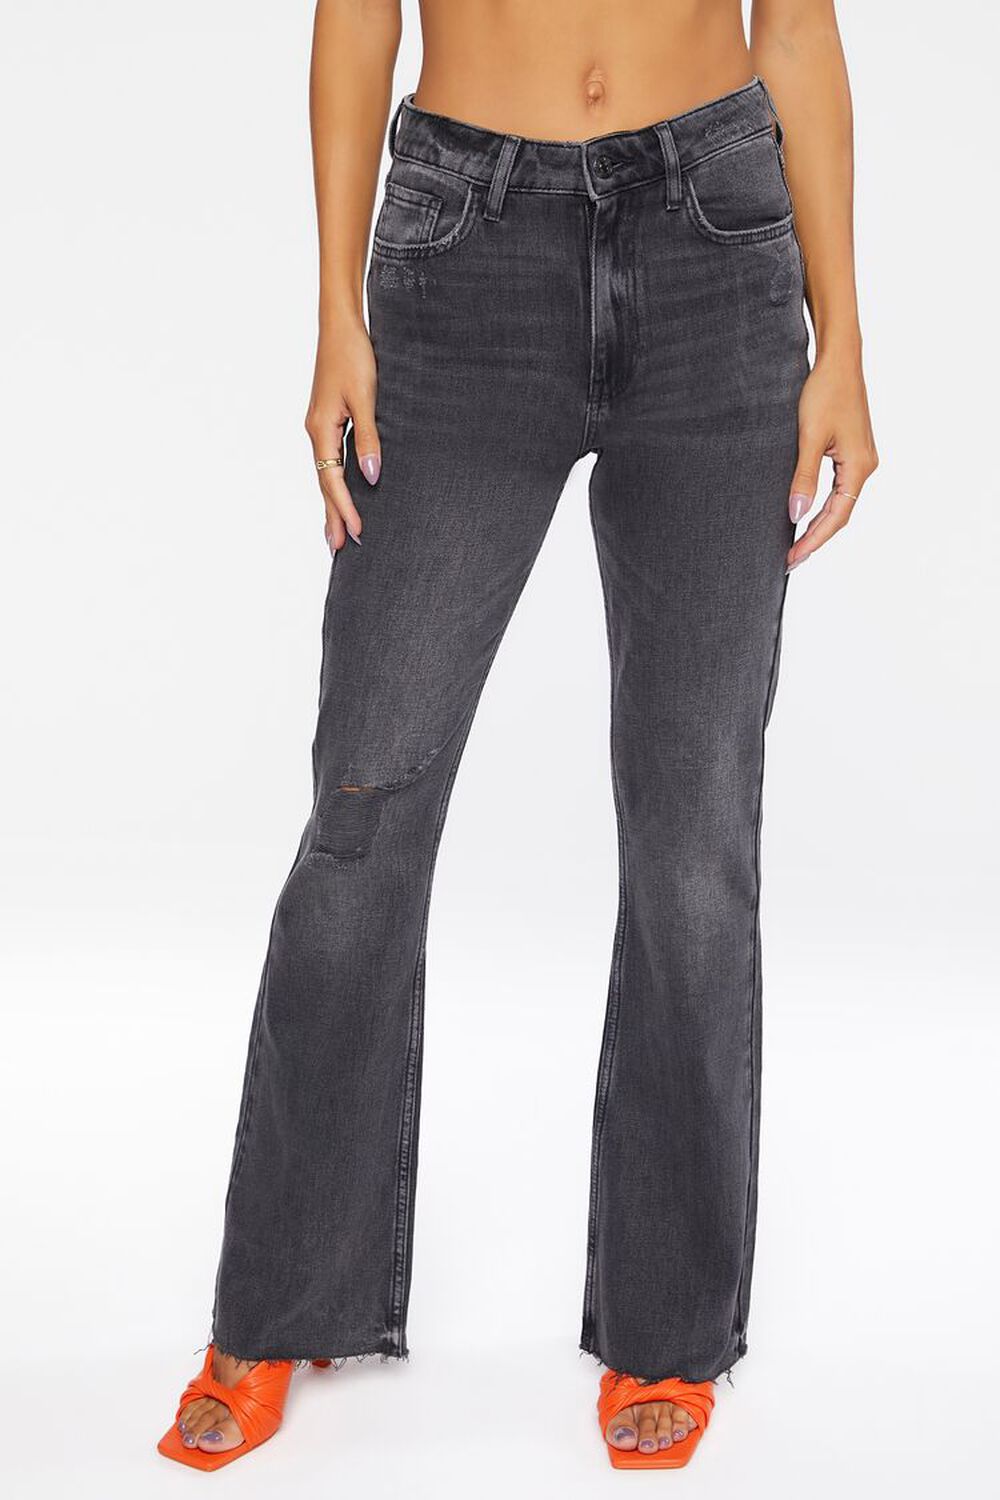 WASHED BLACK Hemp 10% Distressed Raw-Cut Bootcut Jeans, image 2